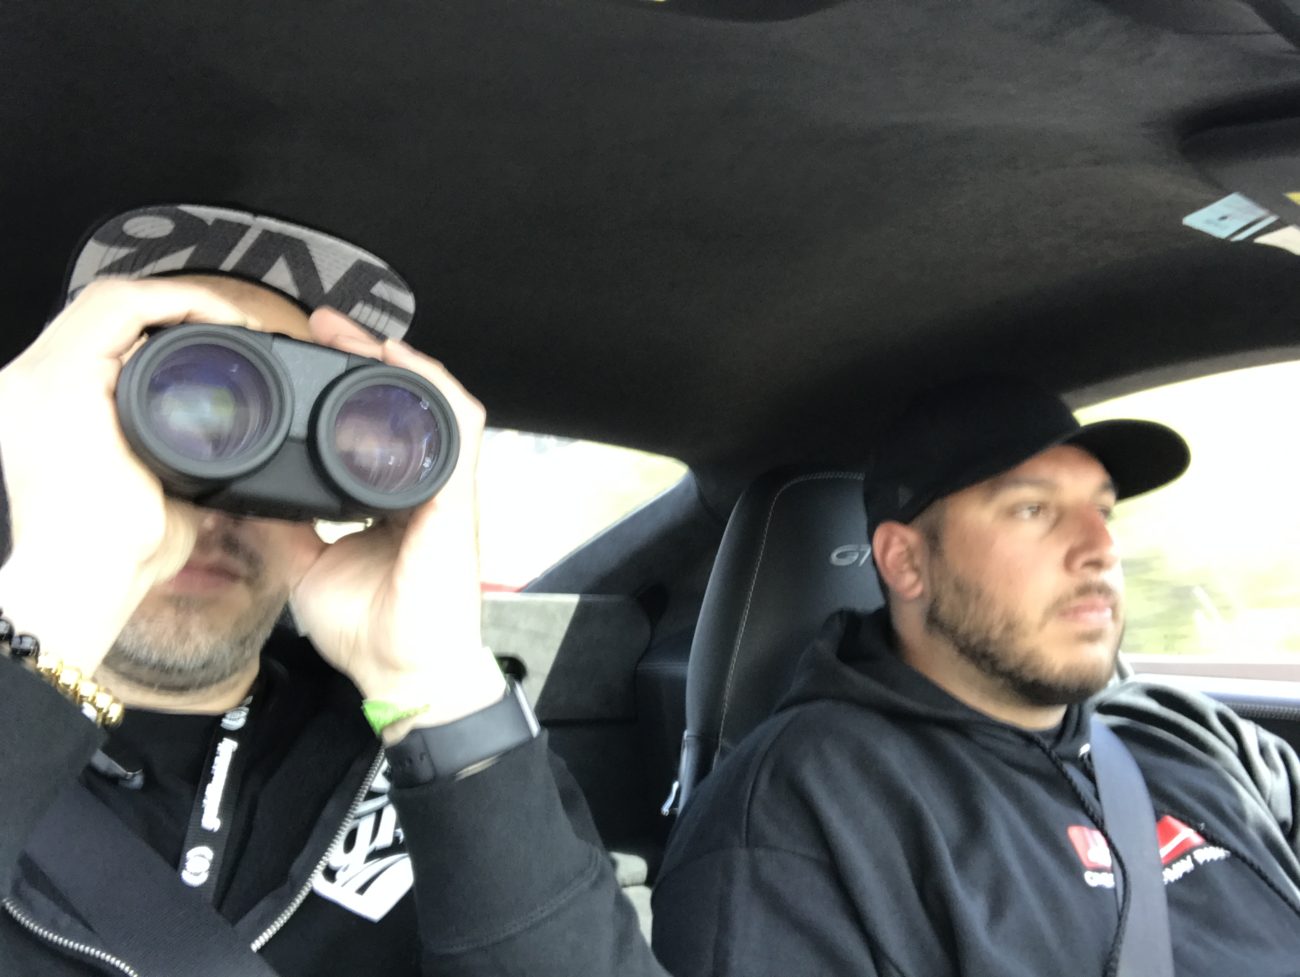 Spotting cops with binoculars